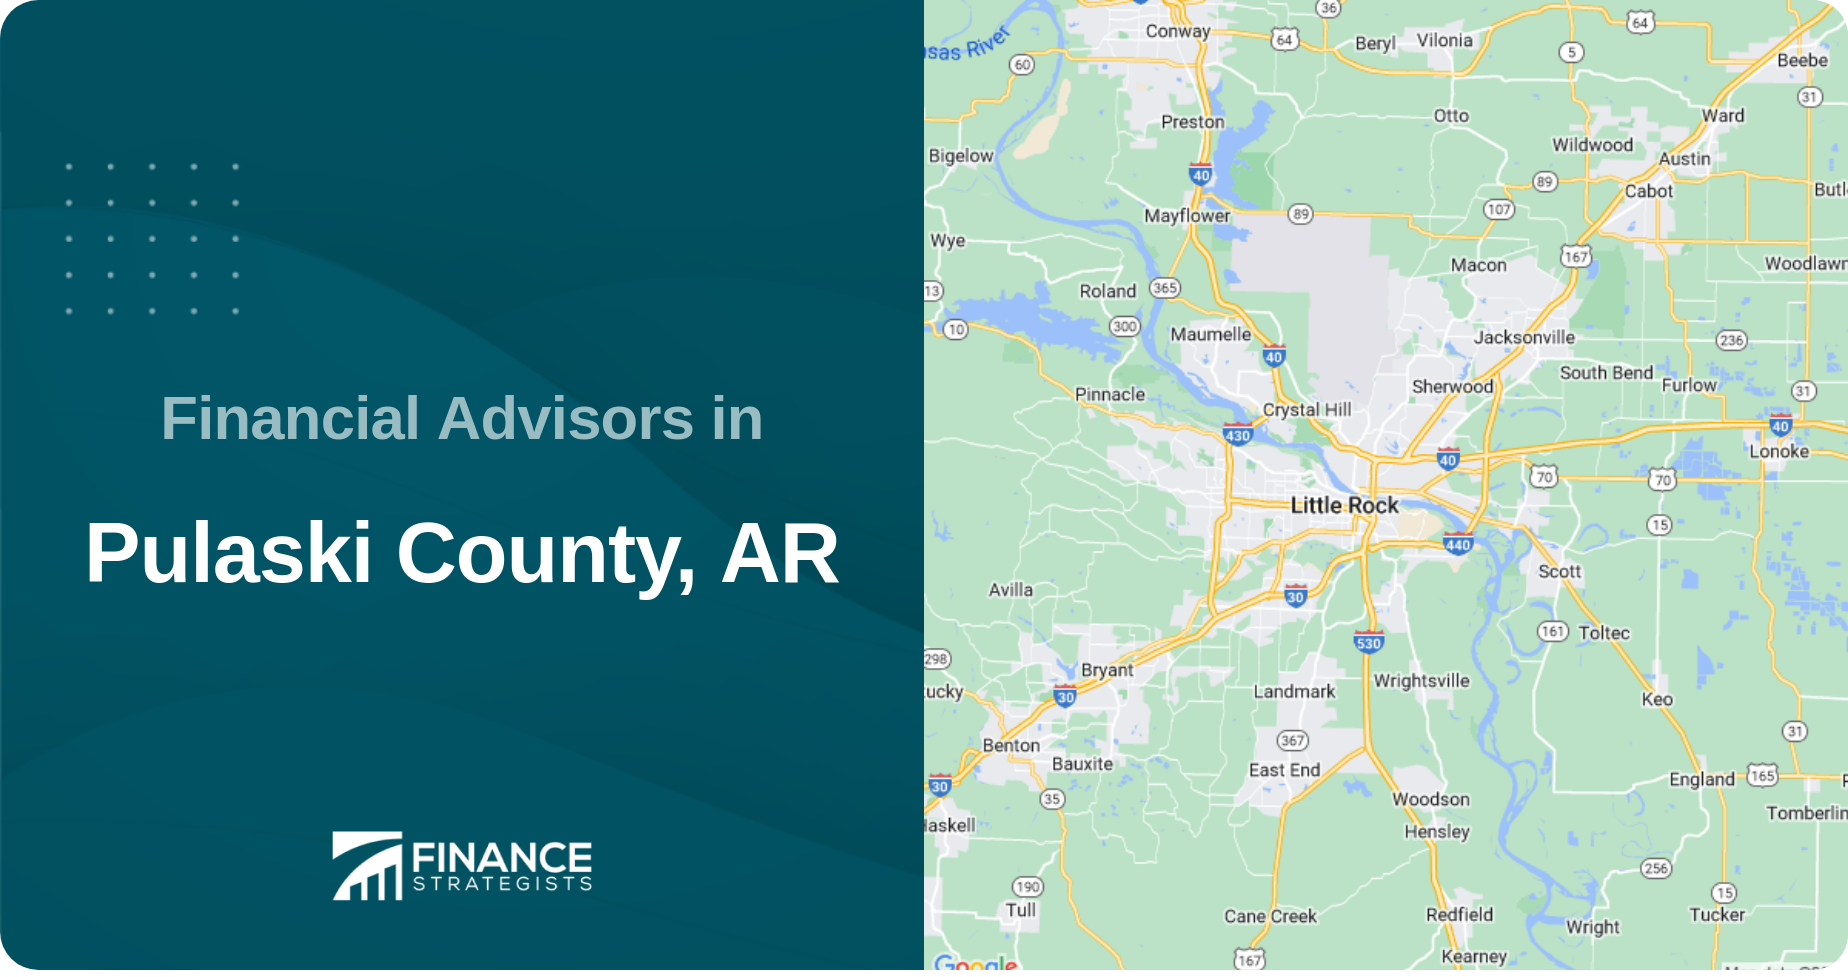 Financial Advisors in Pulaski County, AR